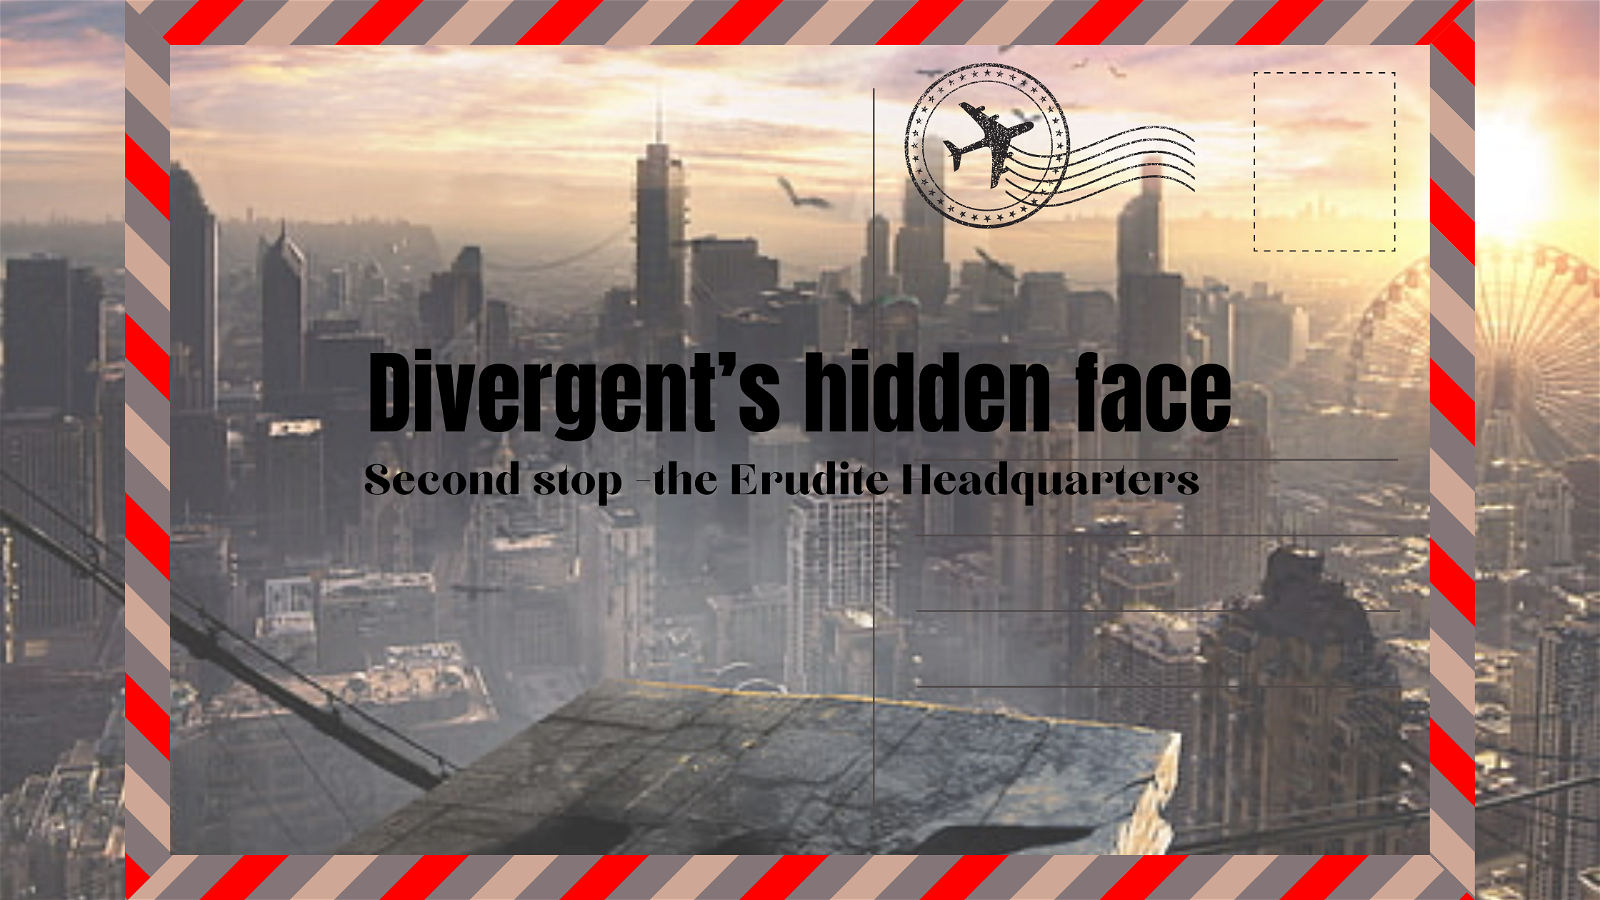 Divergent's hidden face - second stop